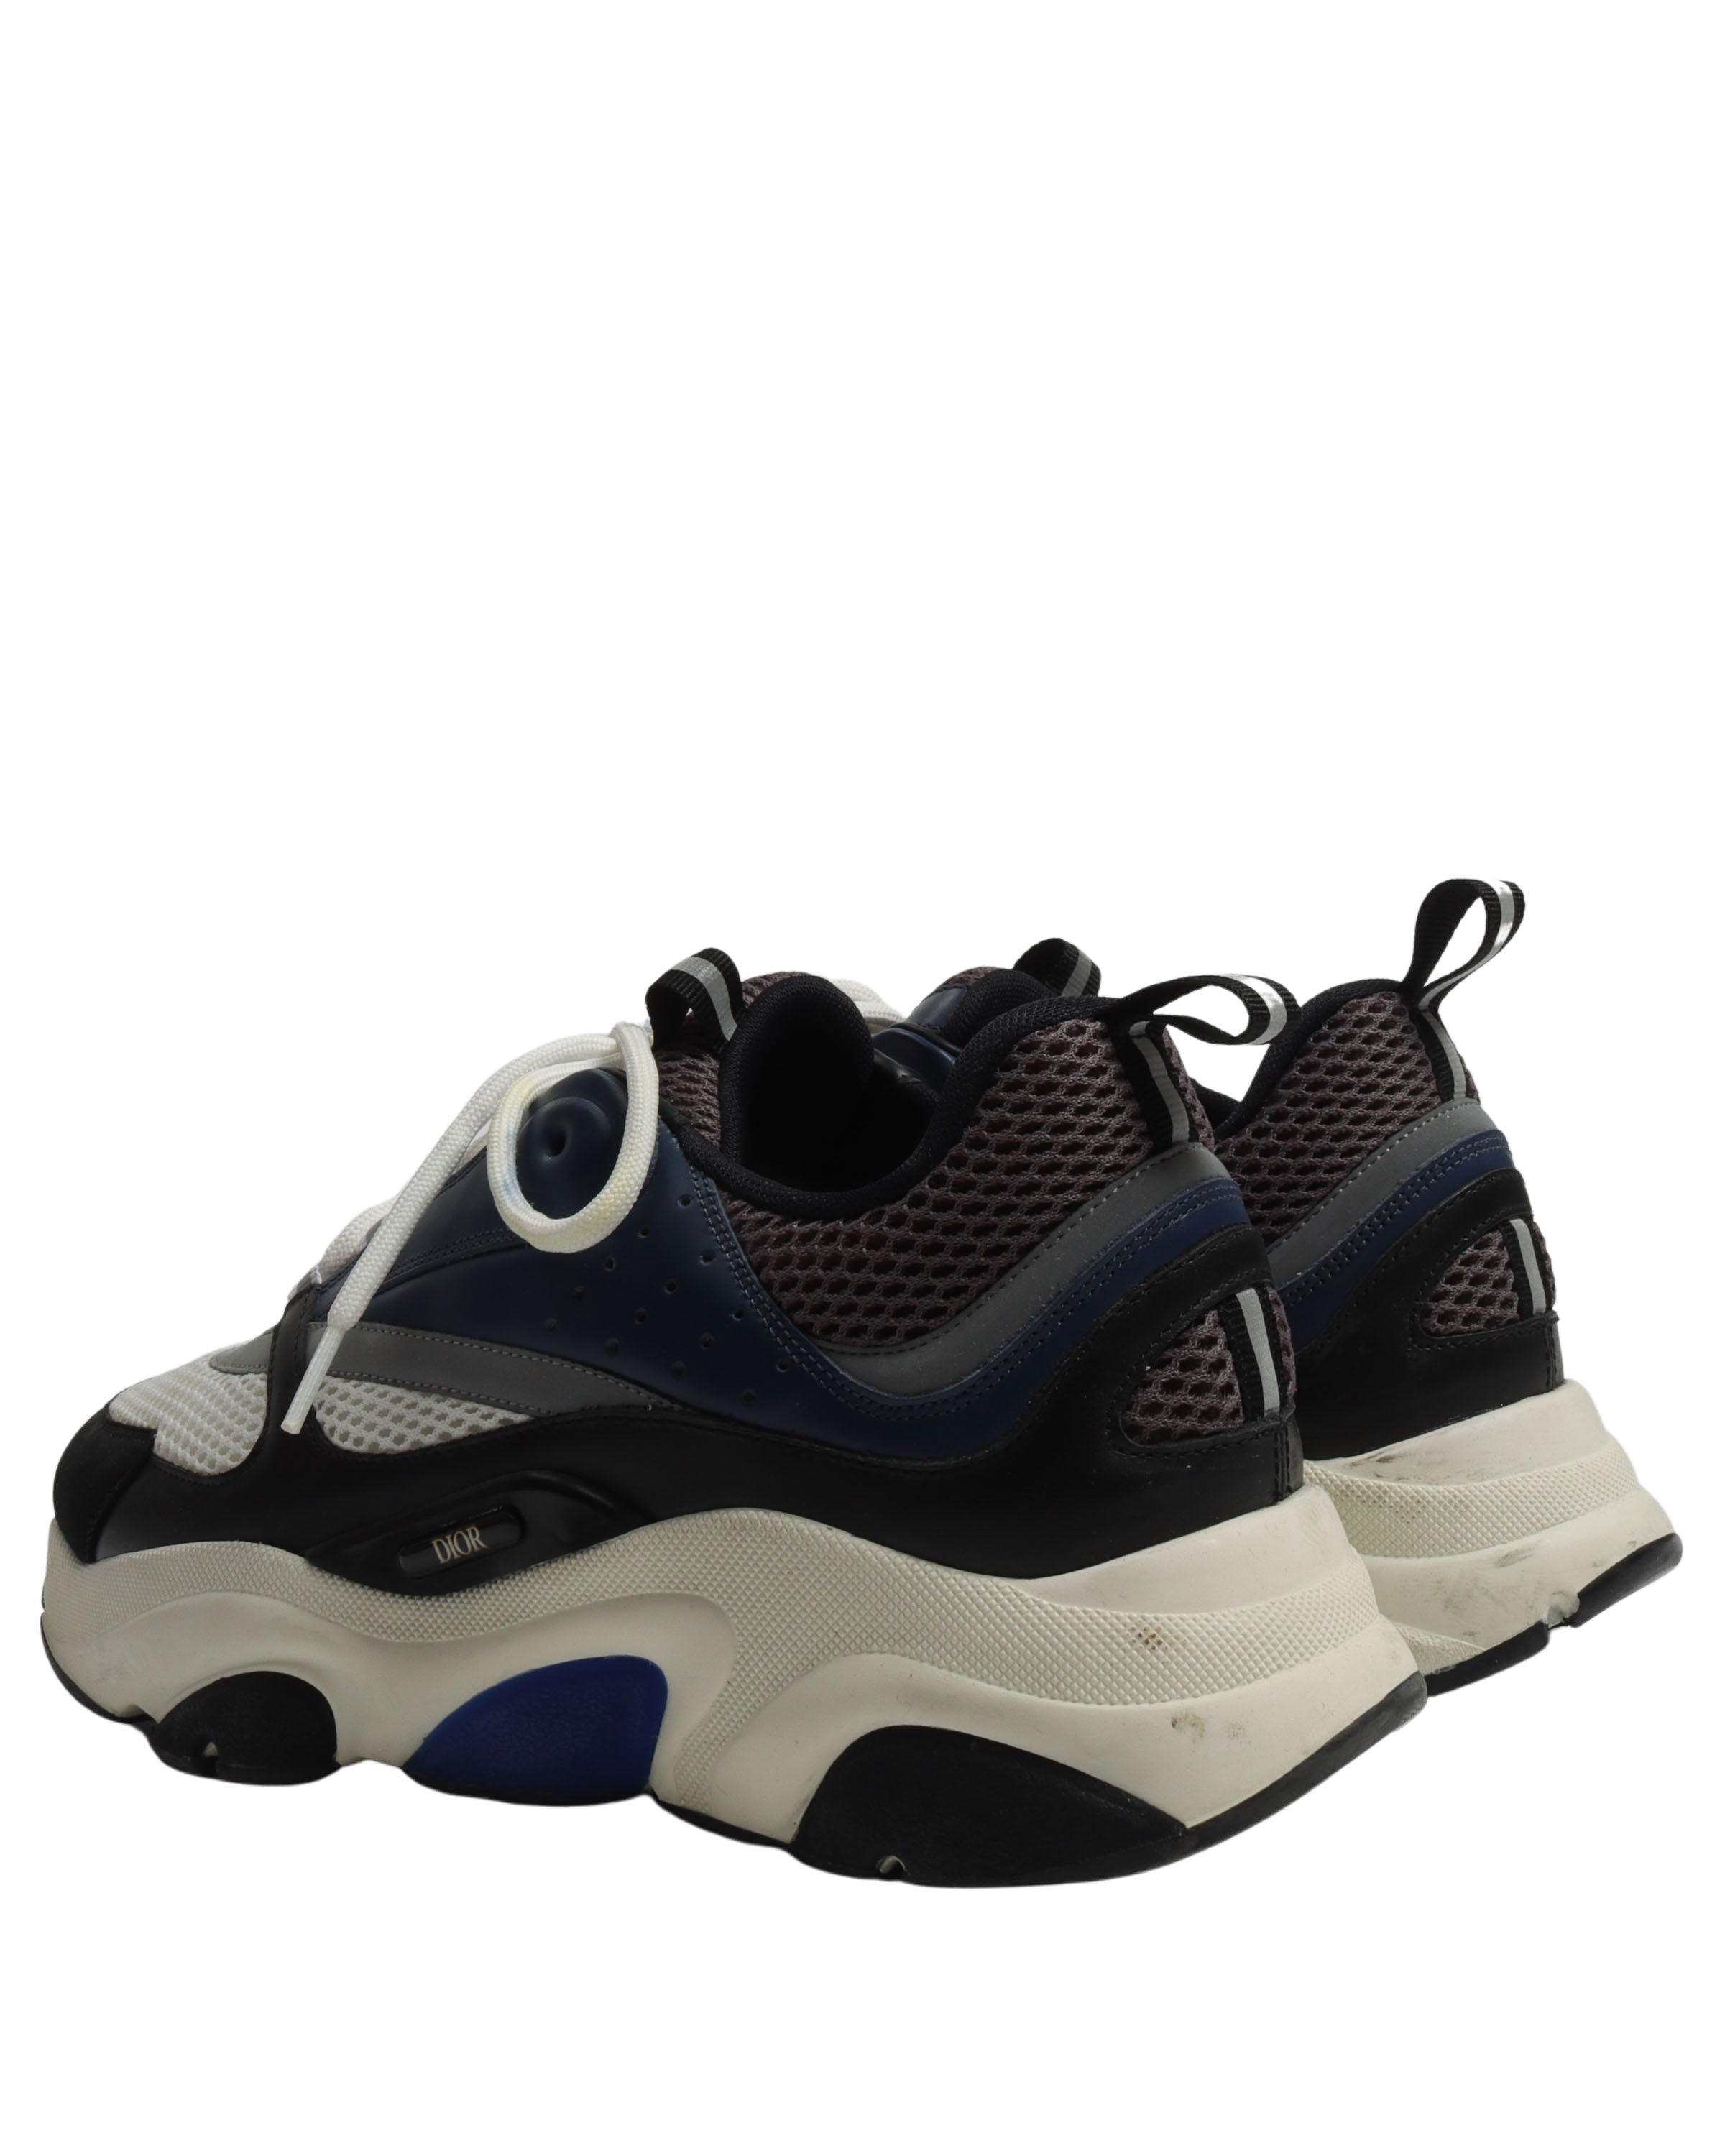 Dior Homme B22 Sneakers EU 39 | 6